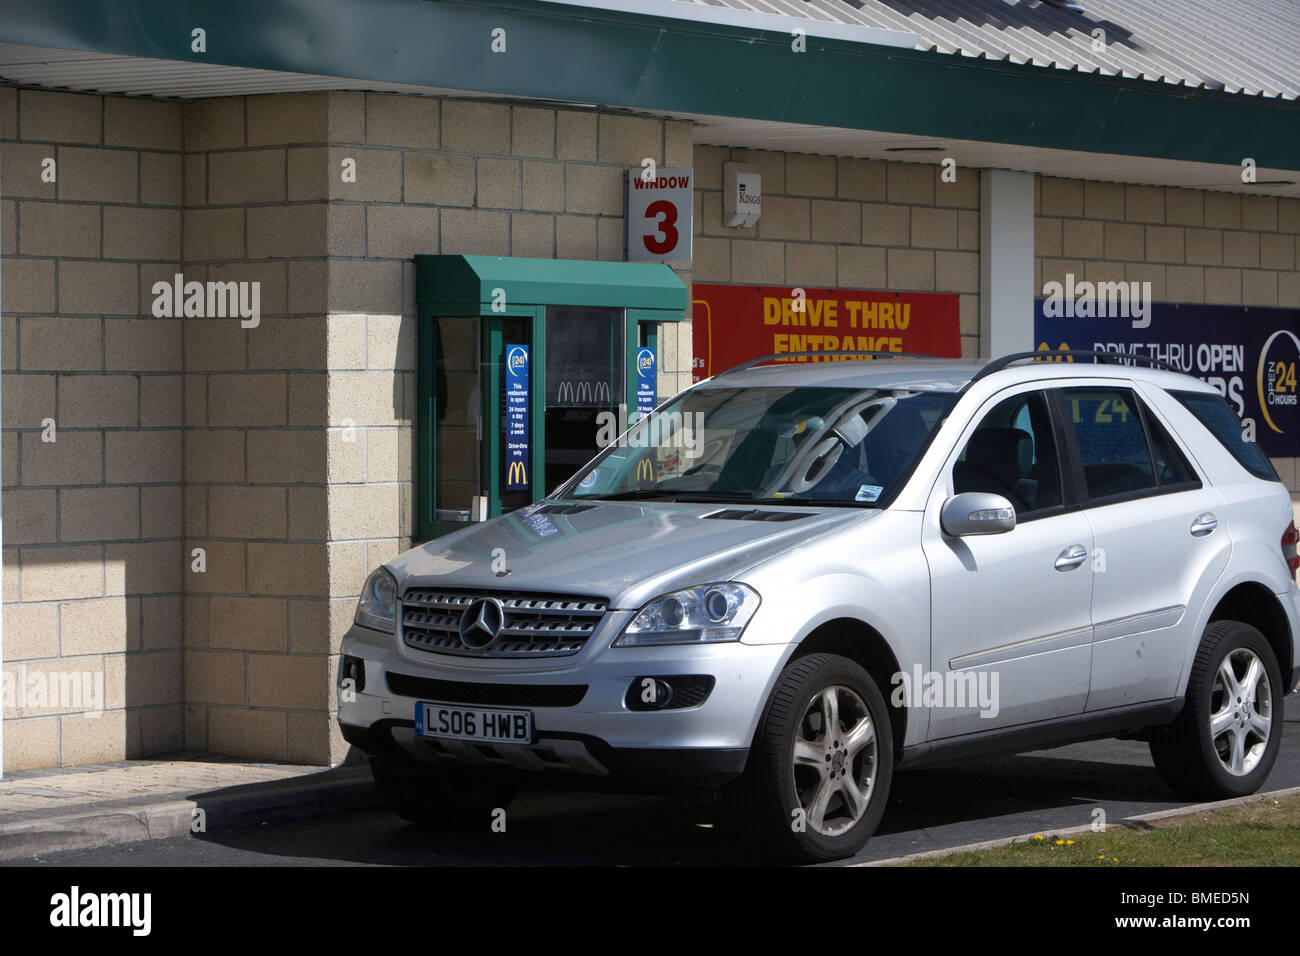 Mercedes Suv am Fenster einer Mcdonalds-Fahrt durch Fast-Food Restaurant Merseyside England uk Stockfoto